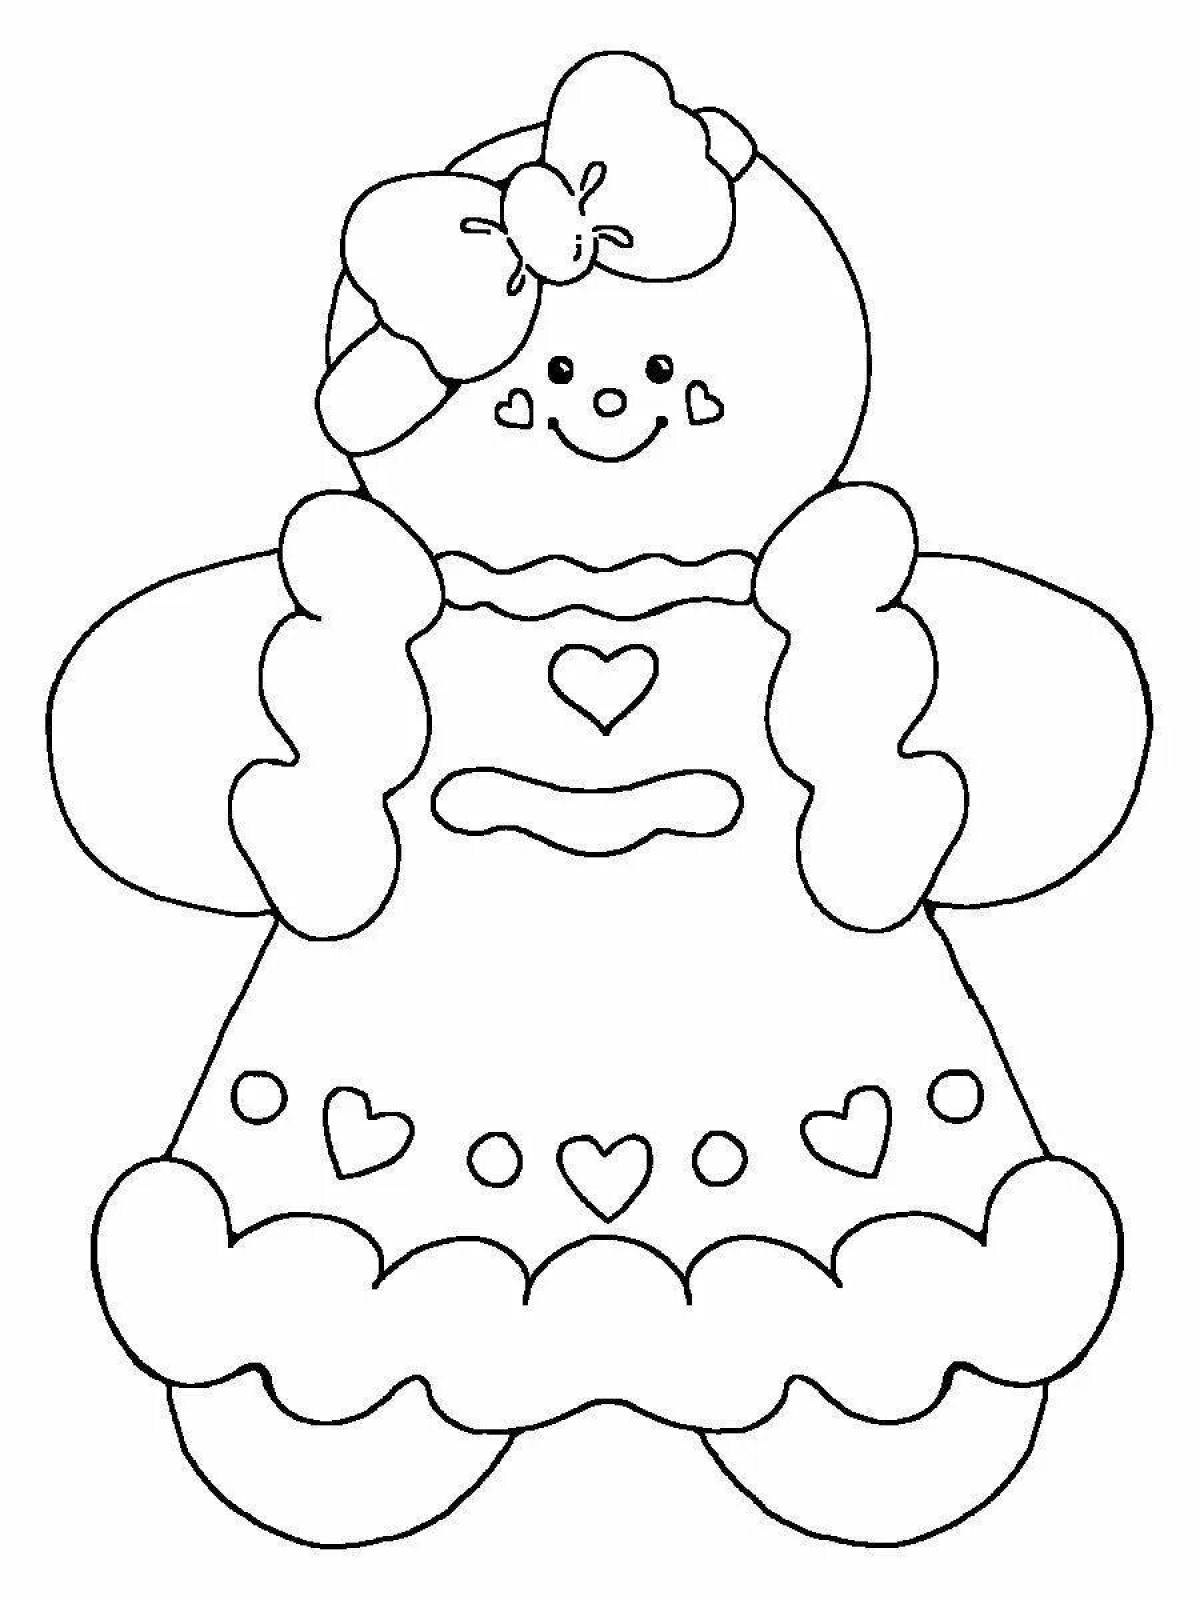 Fun gingerbread coloring for kids